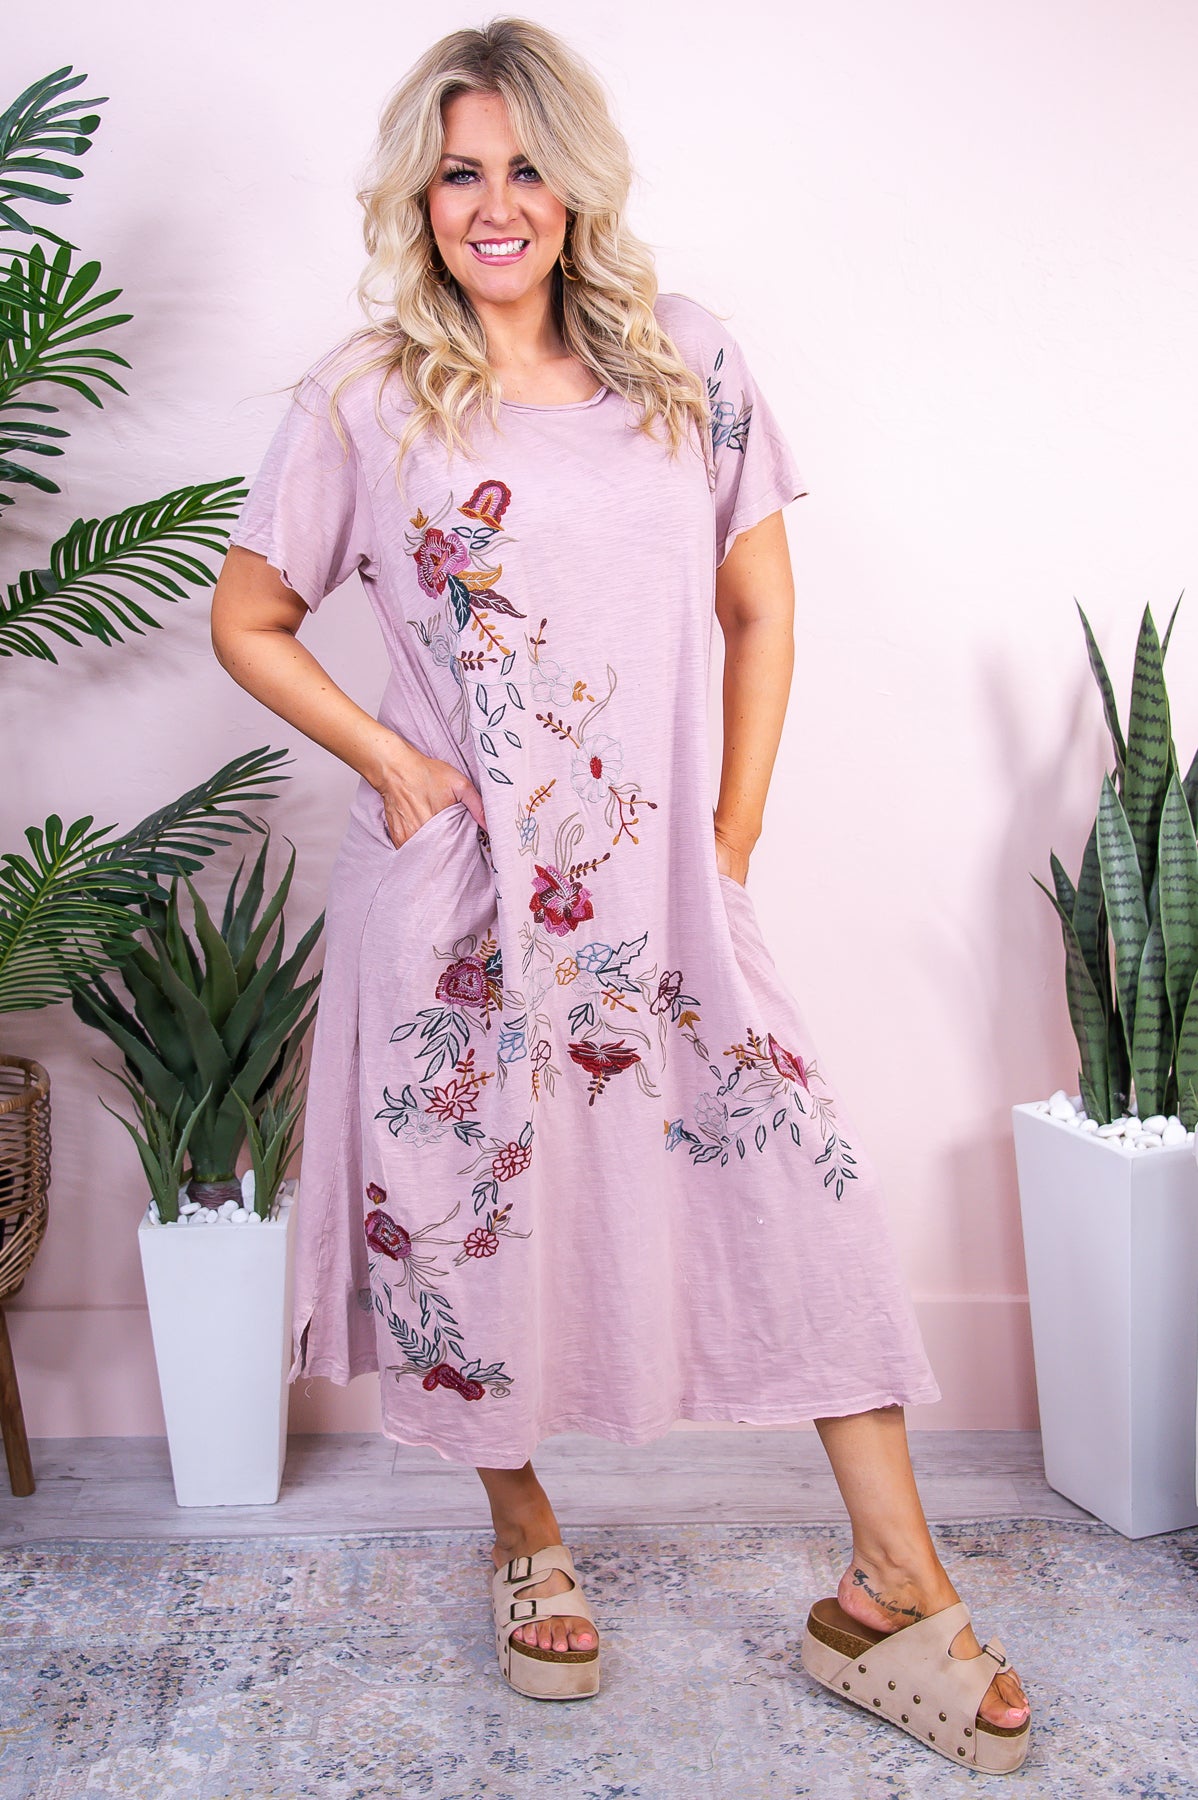 Simple For Summer Mauve/Multi Color Floral Embroidered Dress - D5285MV